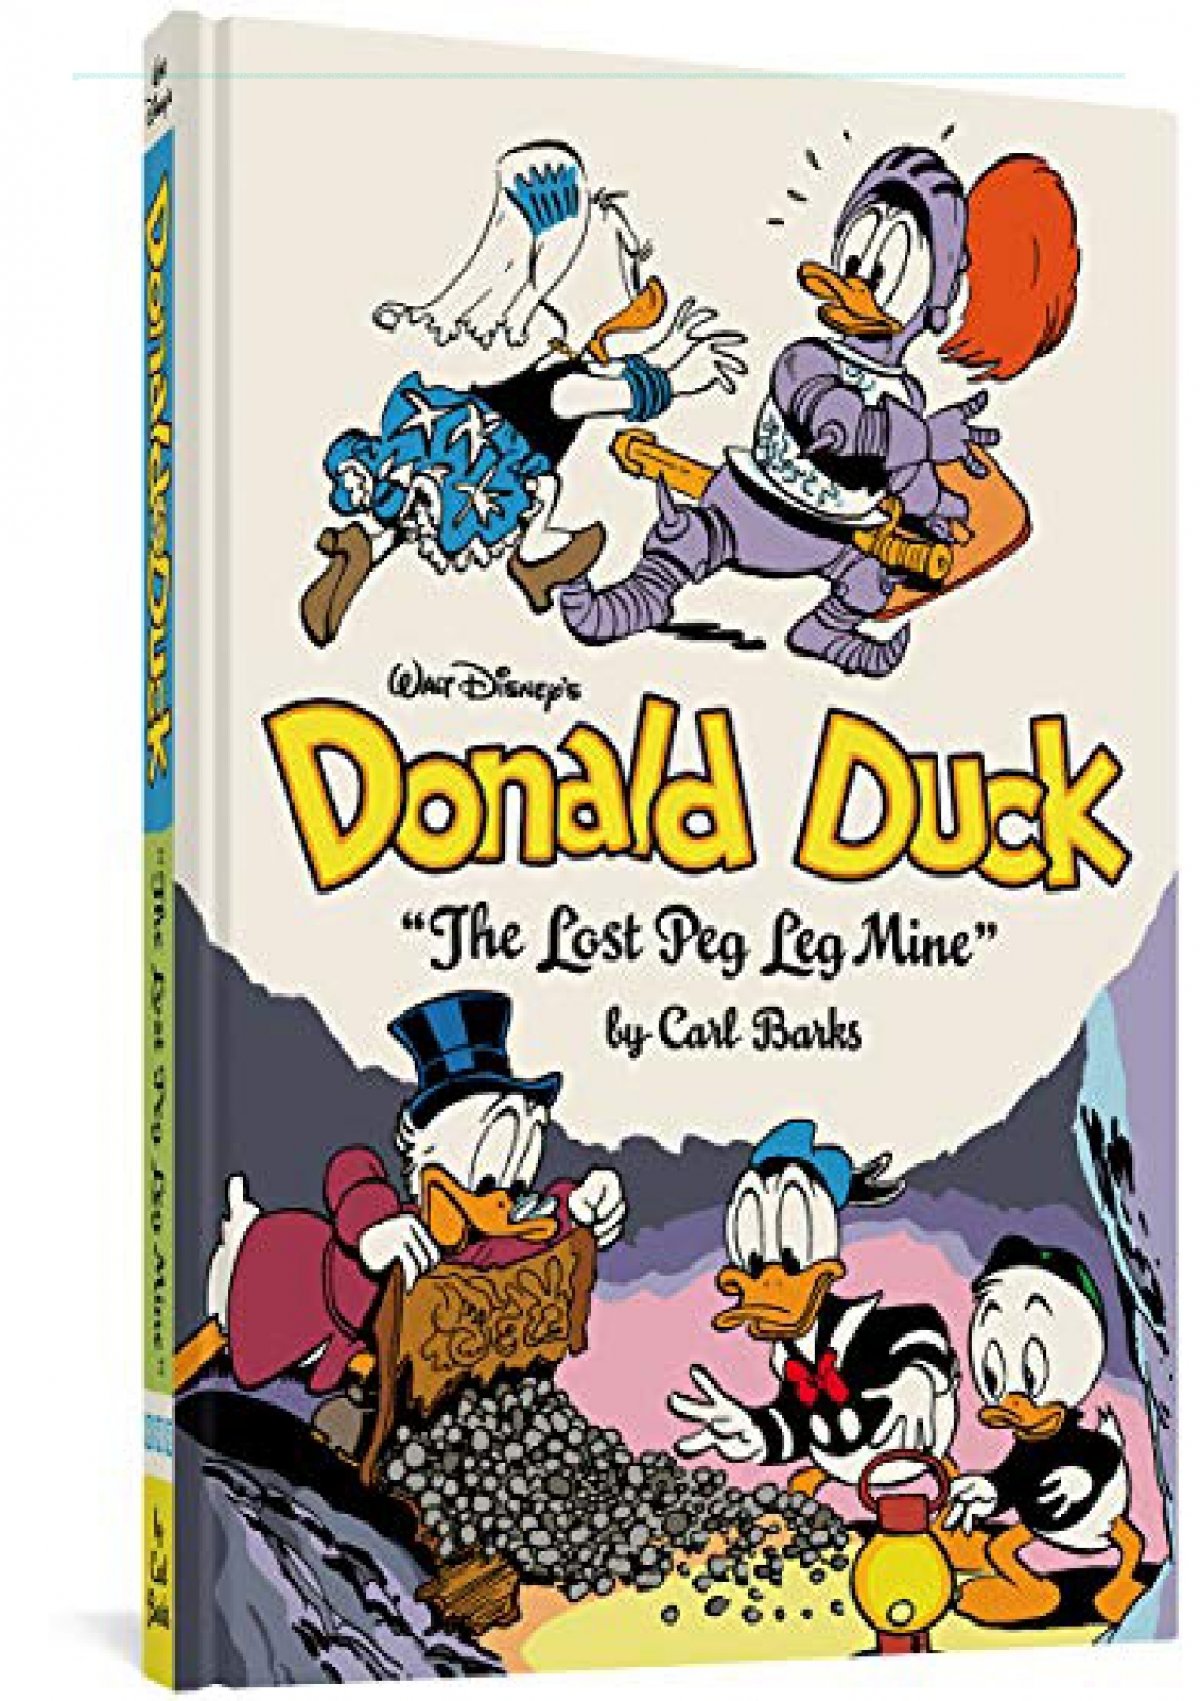 (PDF) Walt Disney's Donald Duck The Lost Peg Leg Mine: The Complete ...